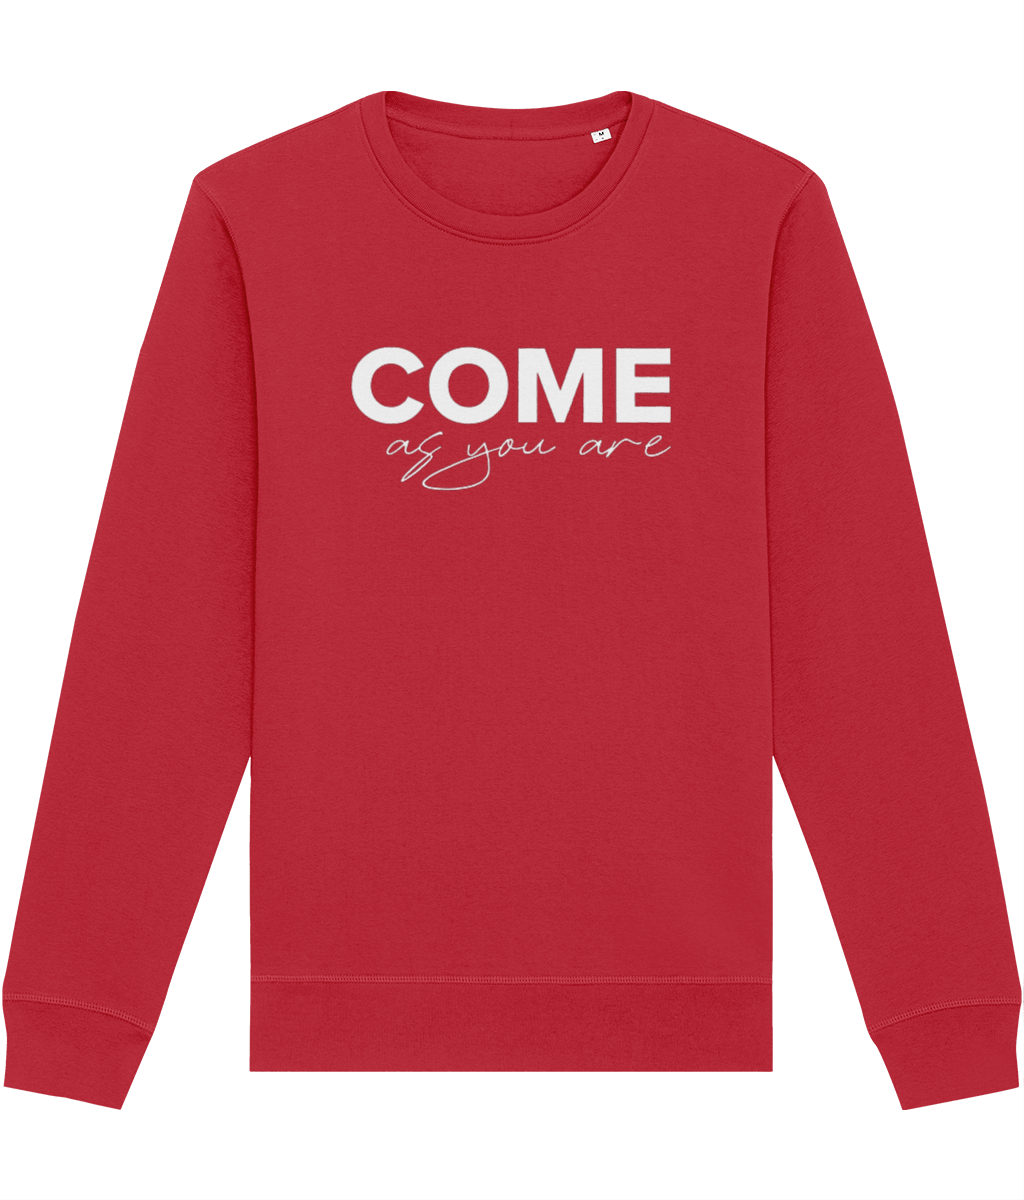 Organic Cotton 'Come As You Are' Sweatshirt - Positive Sweatshirt